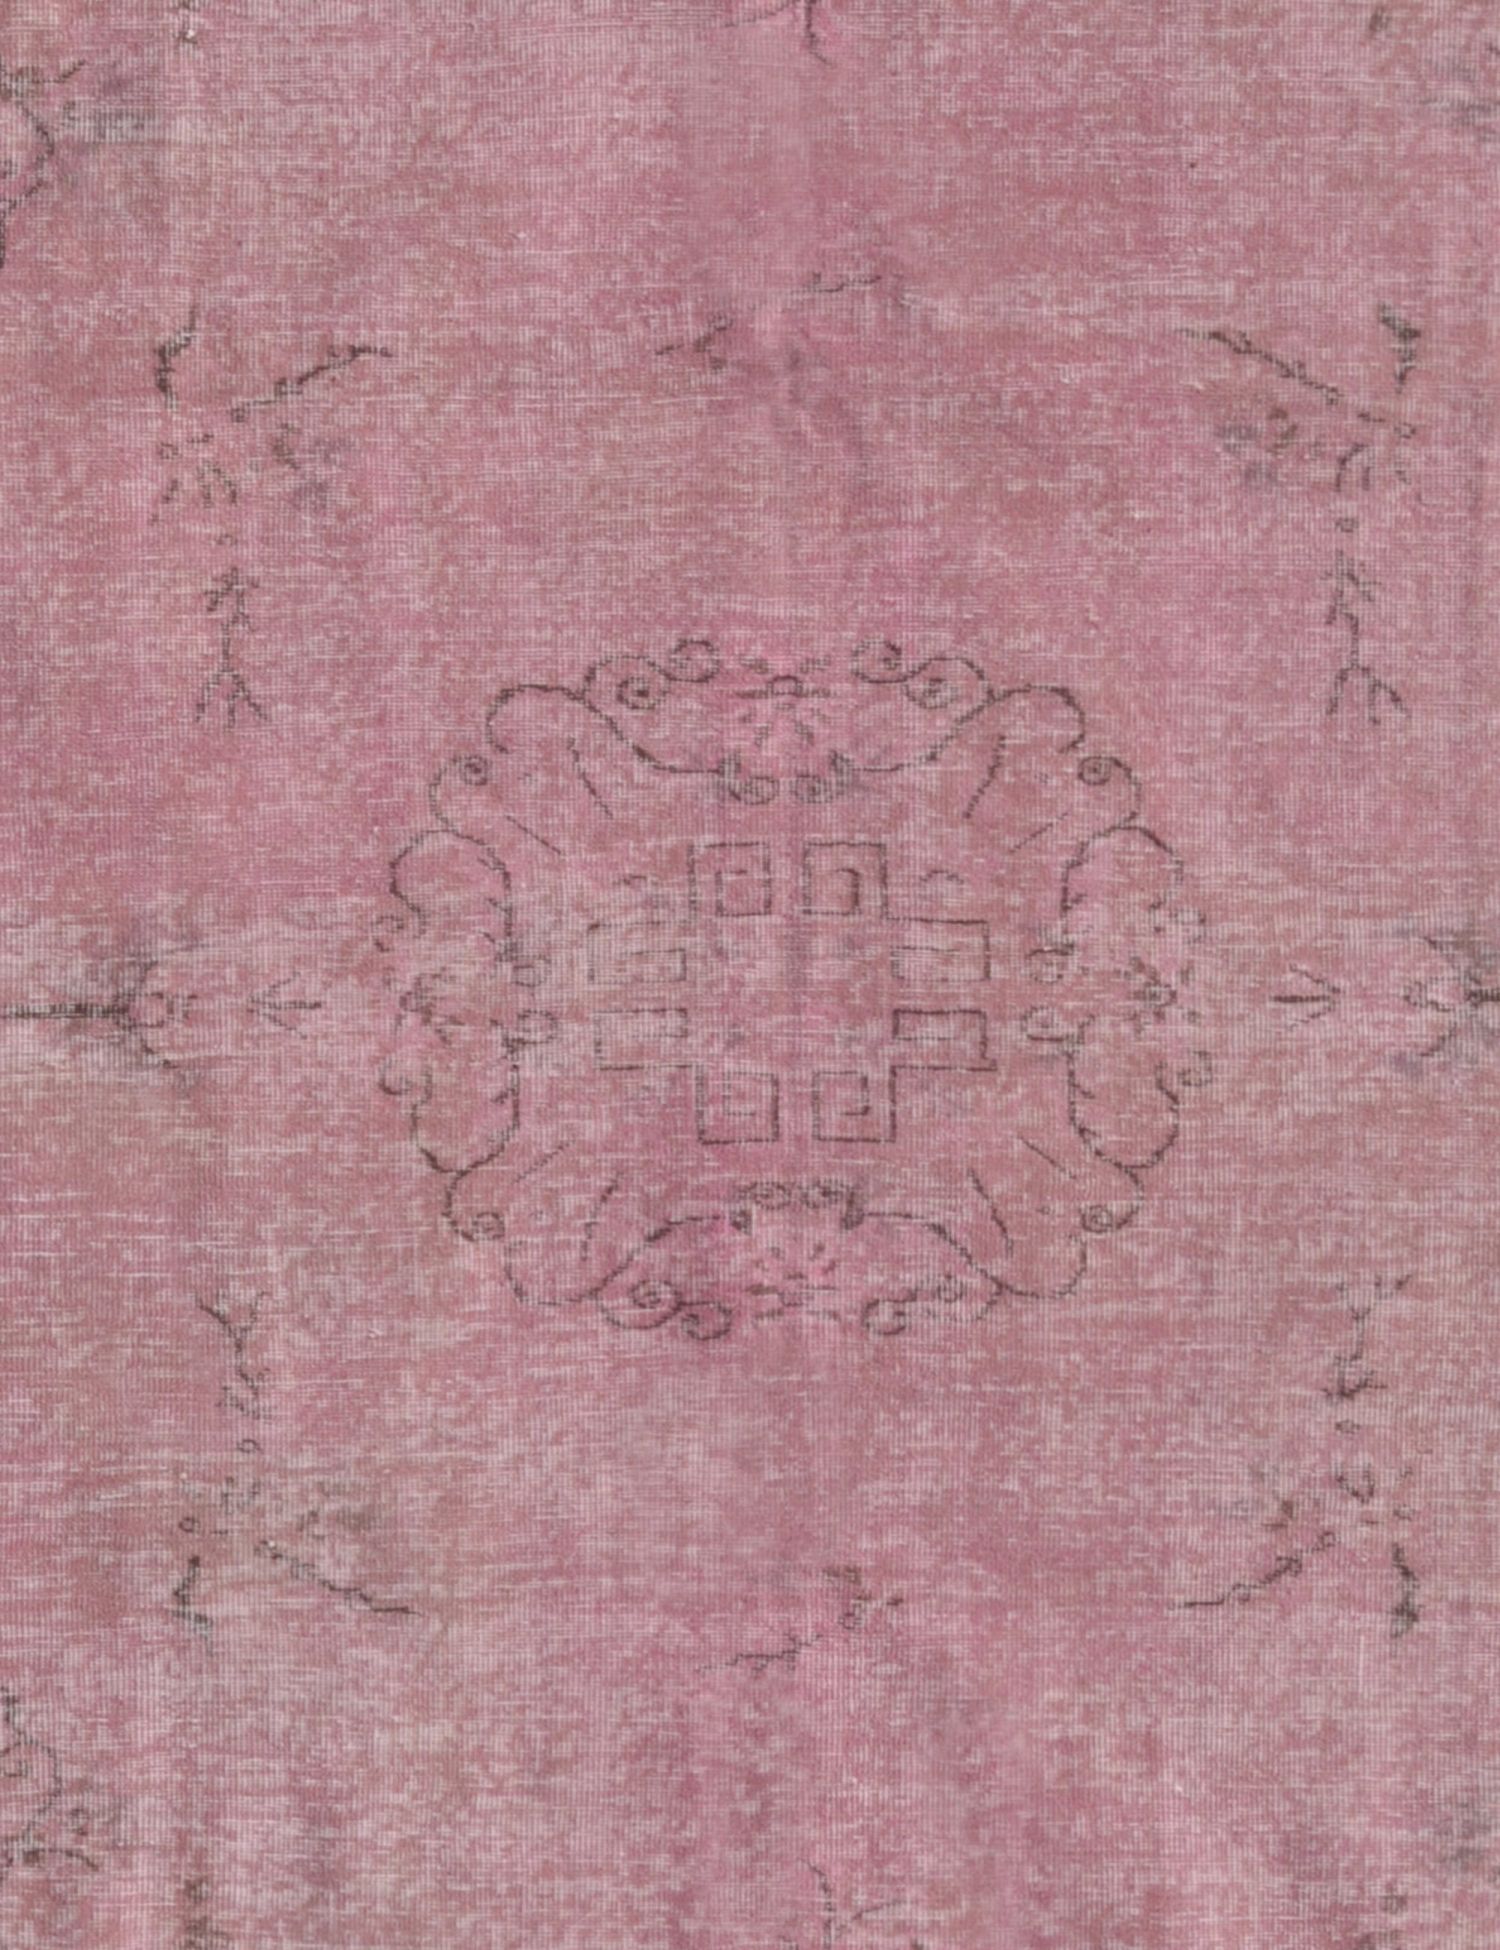 Remade Teppich  rosa <br/>194 x 194 cm